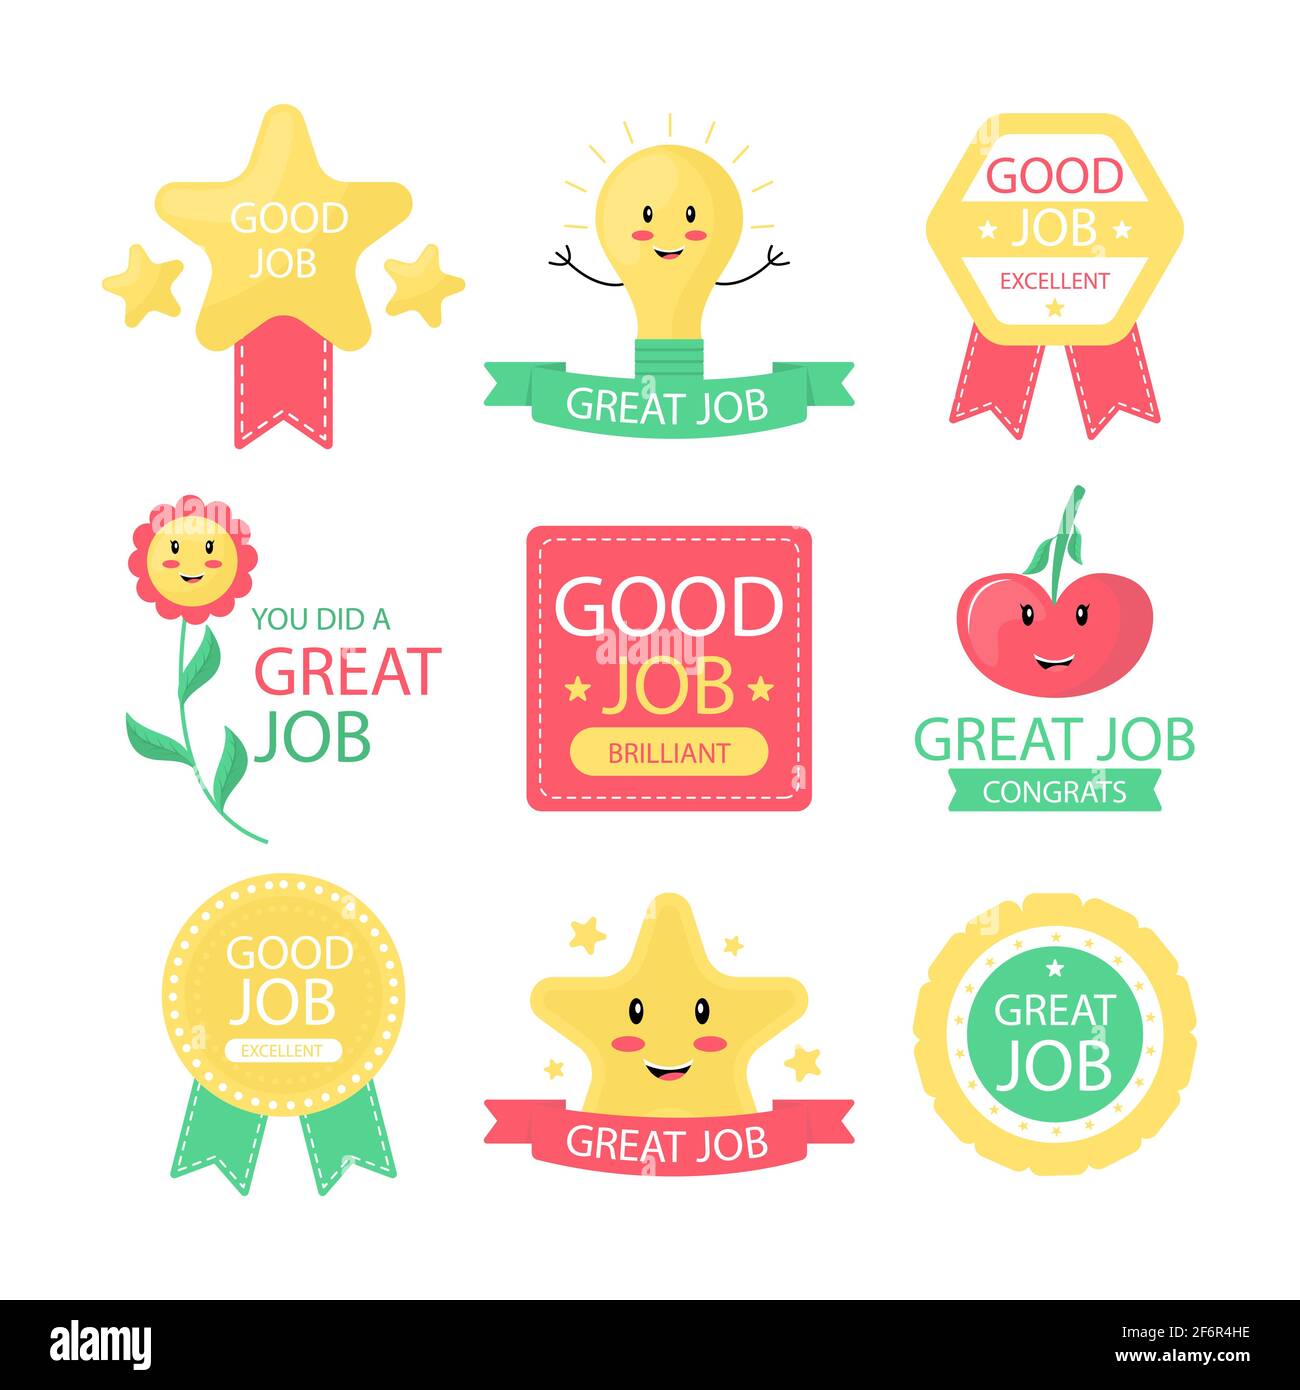 Flat good job and great job stickers Vector illustration. Stock Vector